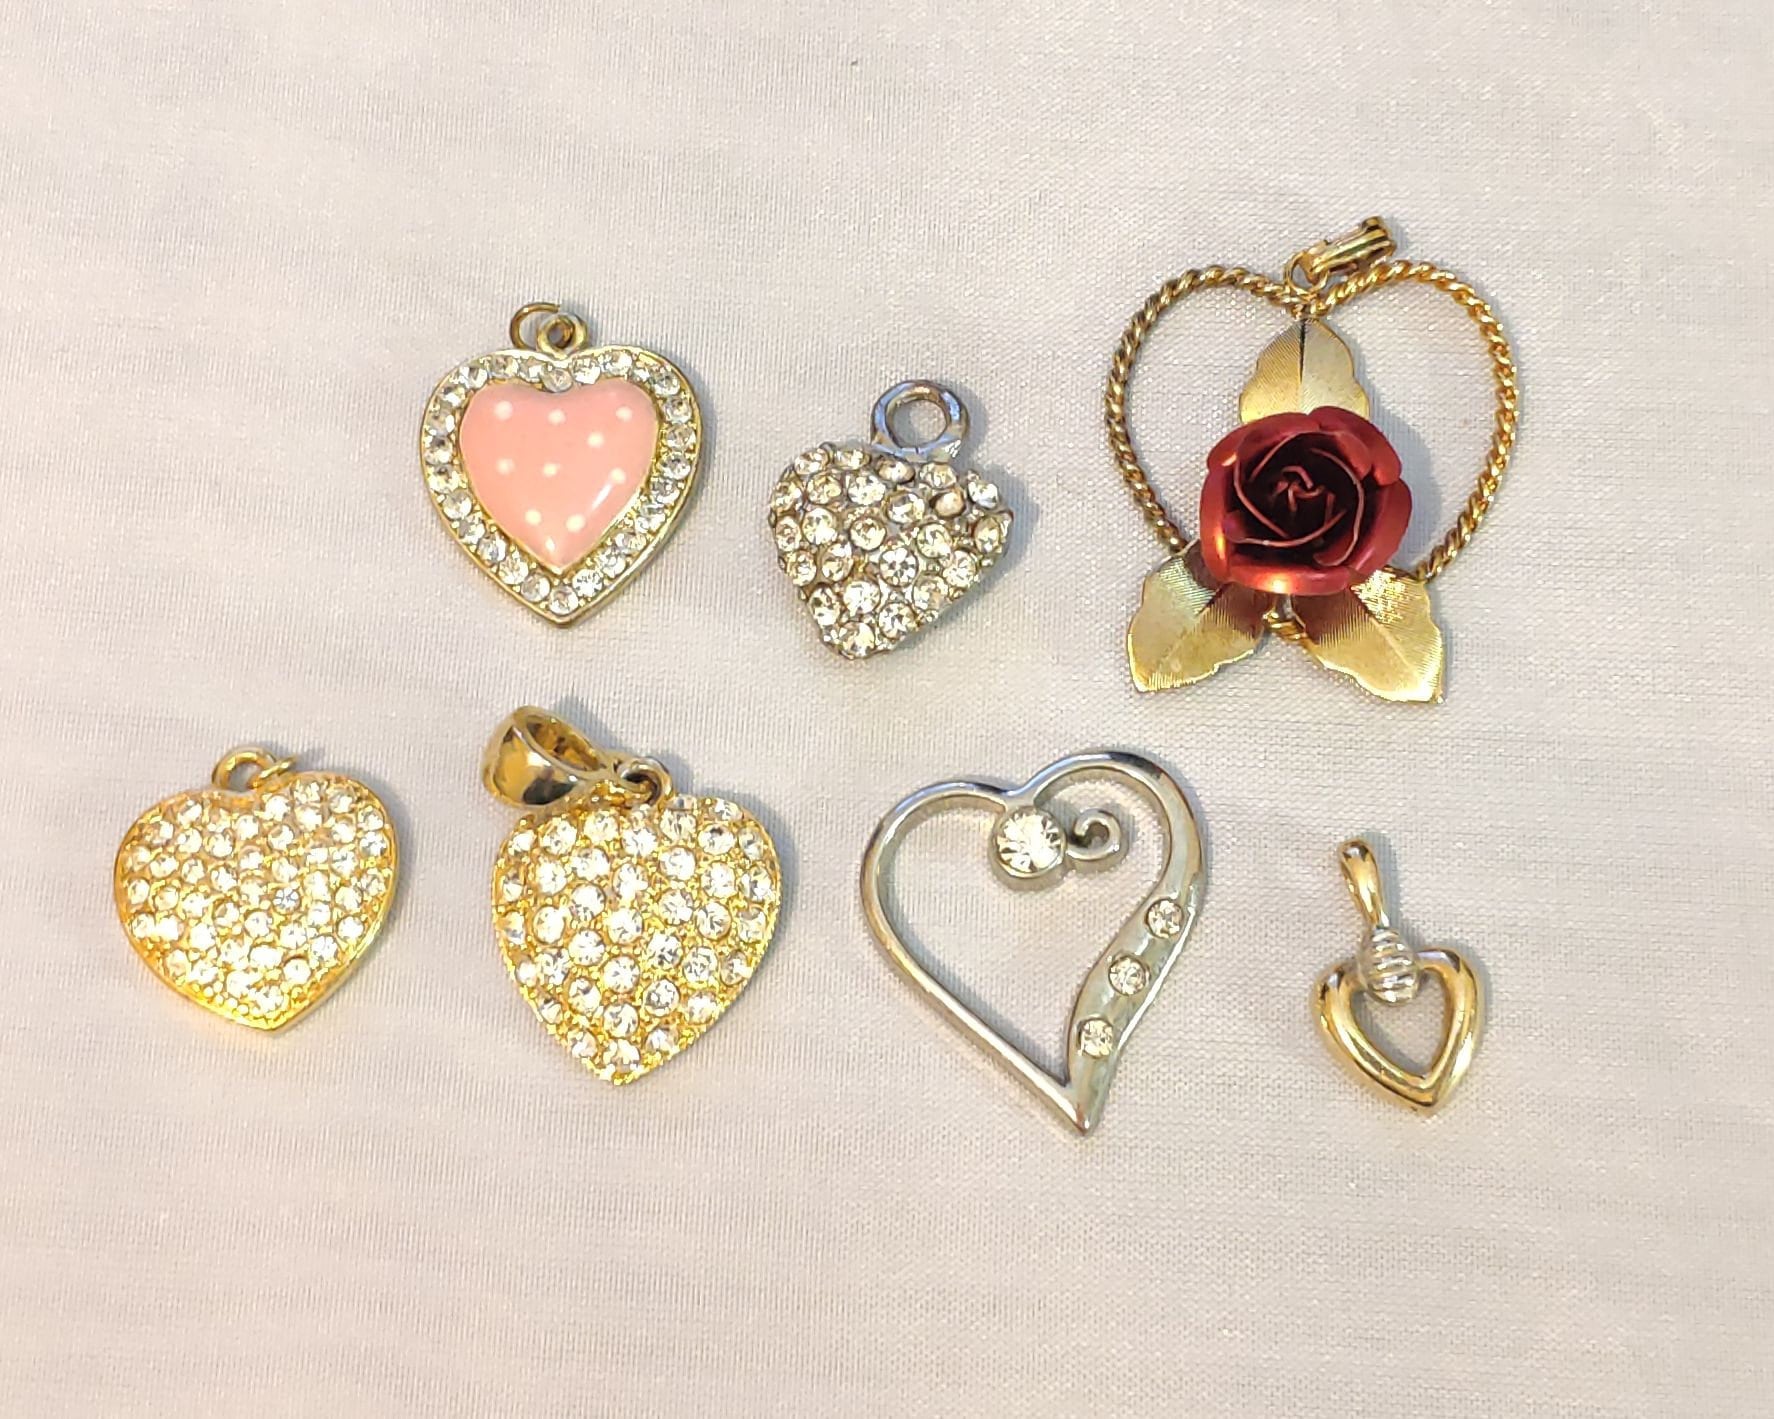 Job Lot of 50+ Gold Heart Pendants for Necklaces NEW Charm Bracelets etc 